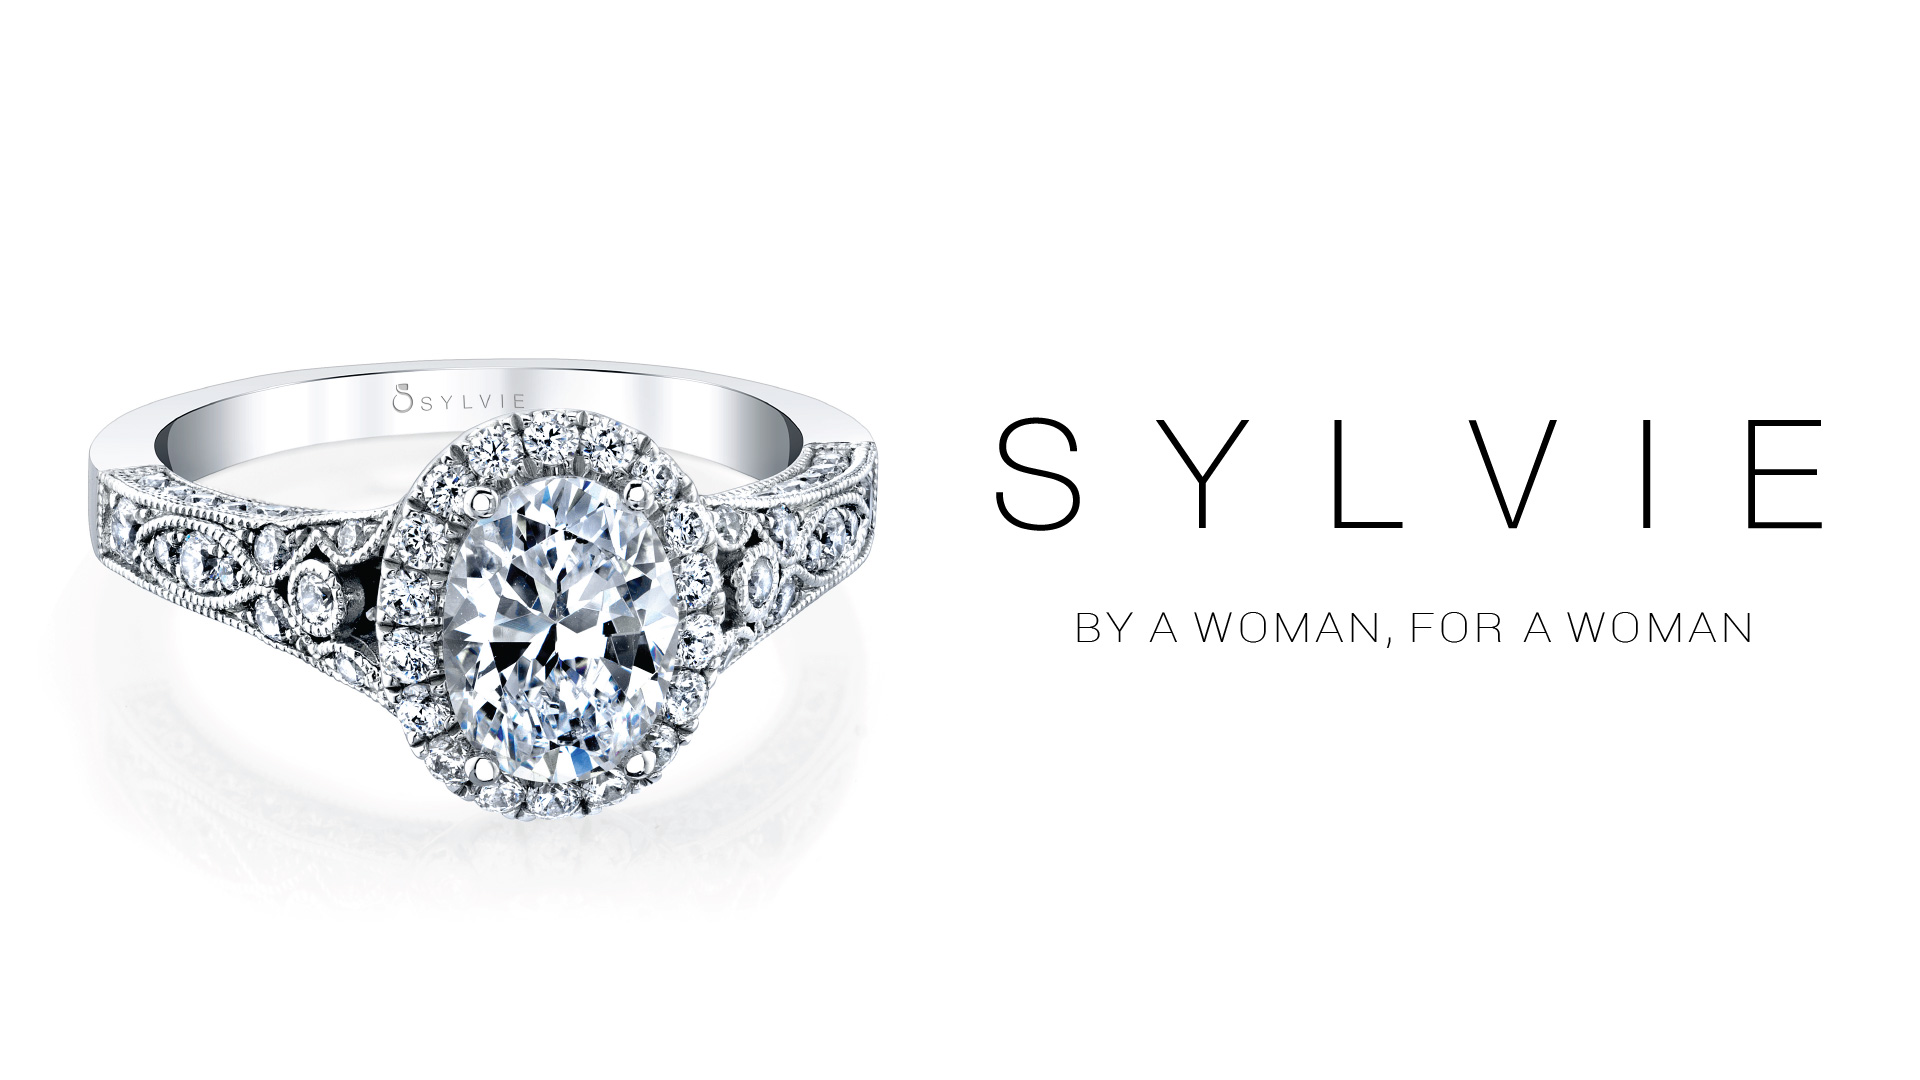 Sylvie, Diamonds, Diamond, Engagement Rings, Diamond Rings, Jewelry, Fine Jewelry, Jewelry Stores, Geiss and Sons, Greenville, South Carolina